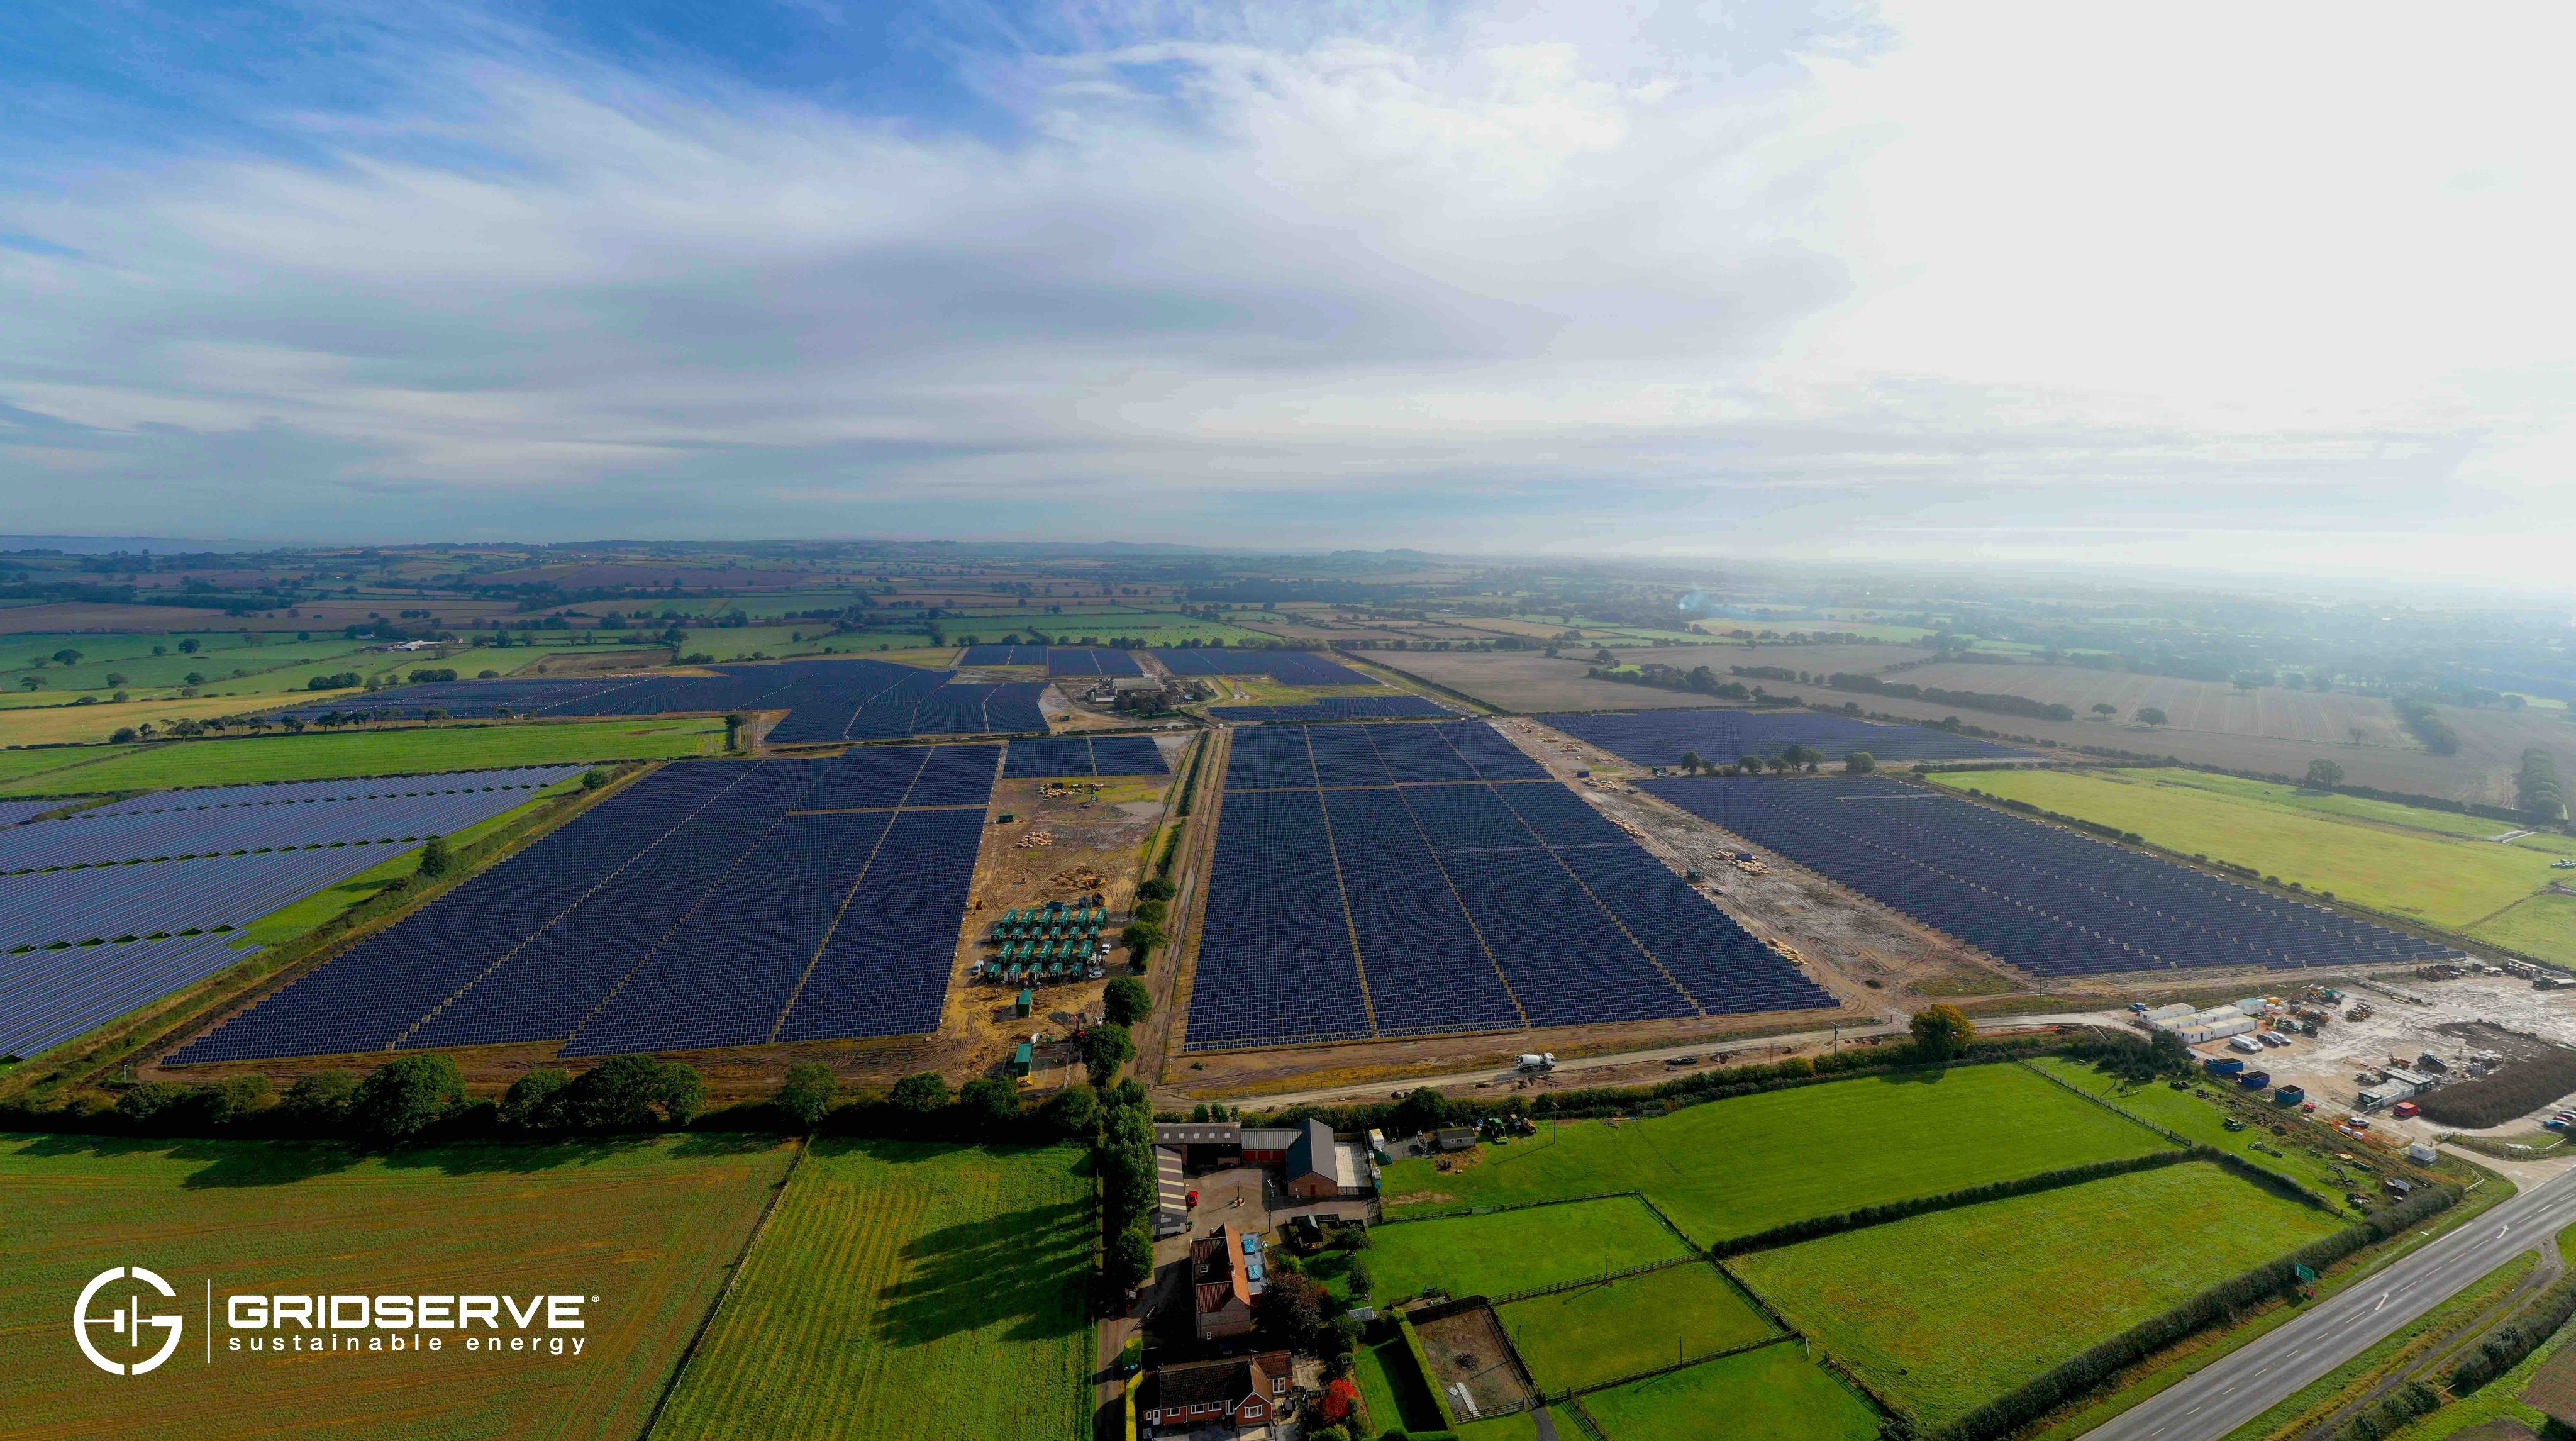 Warrington Borough Council hybrid solar farm. Copyright: Gridserve